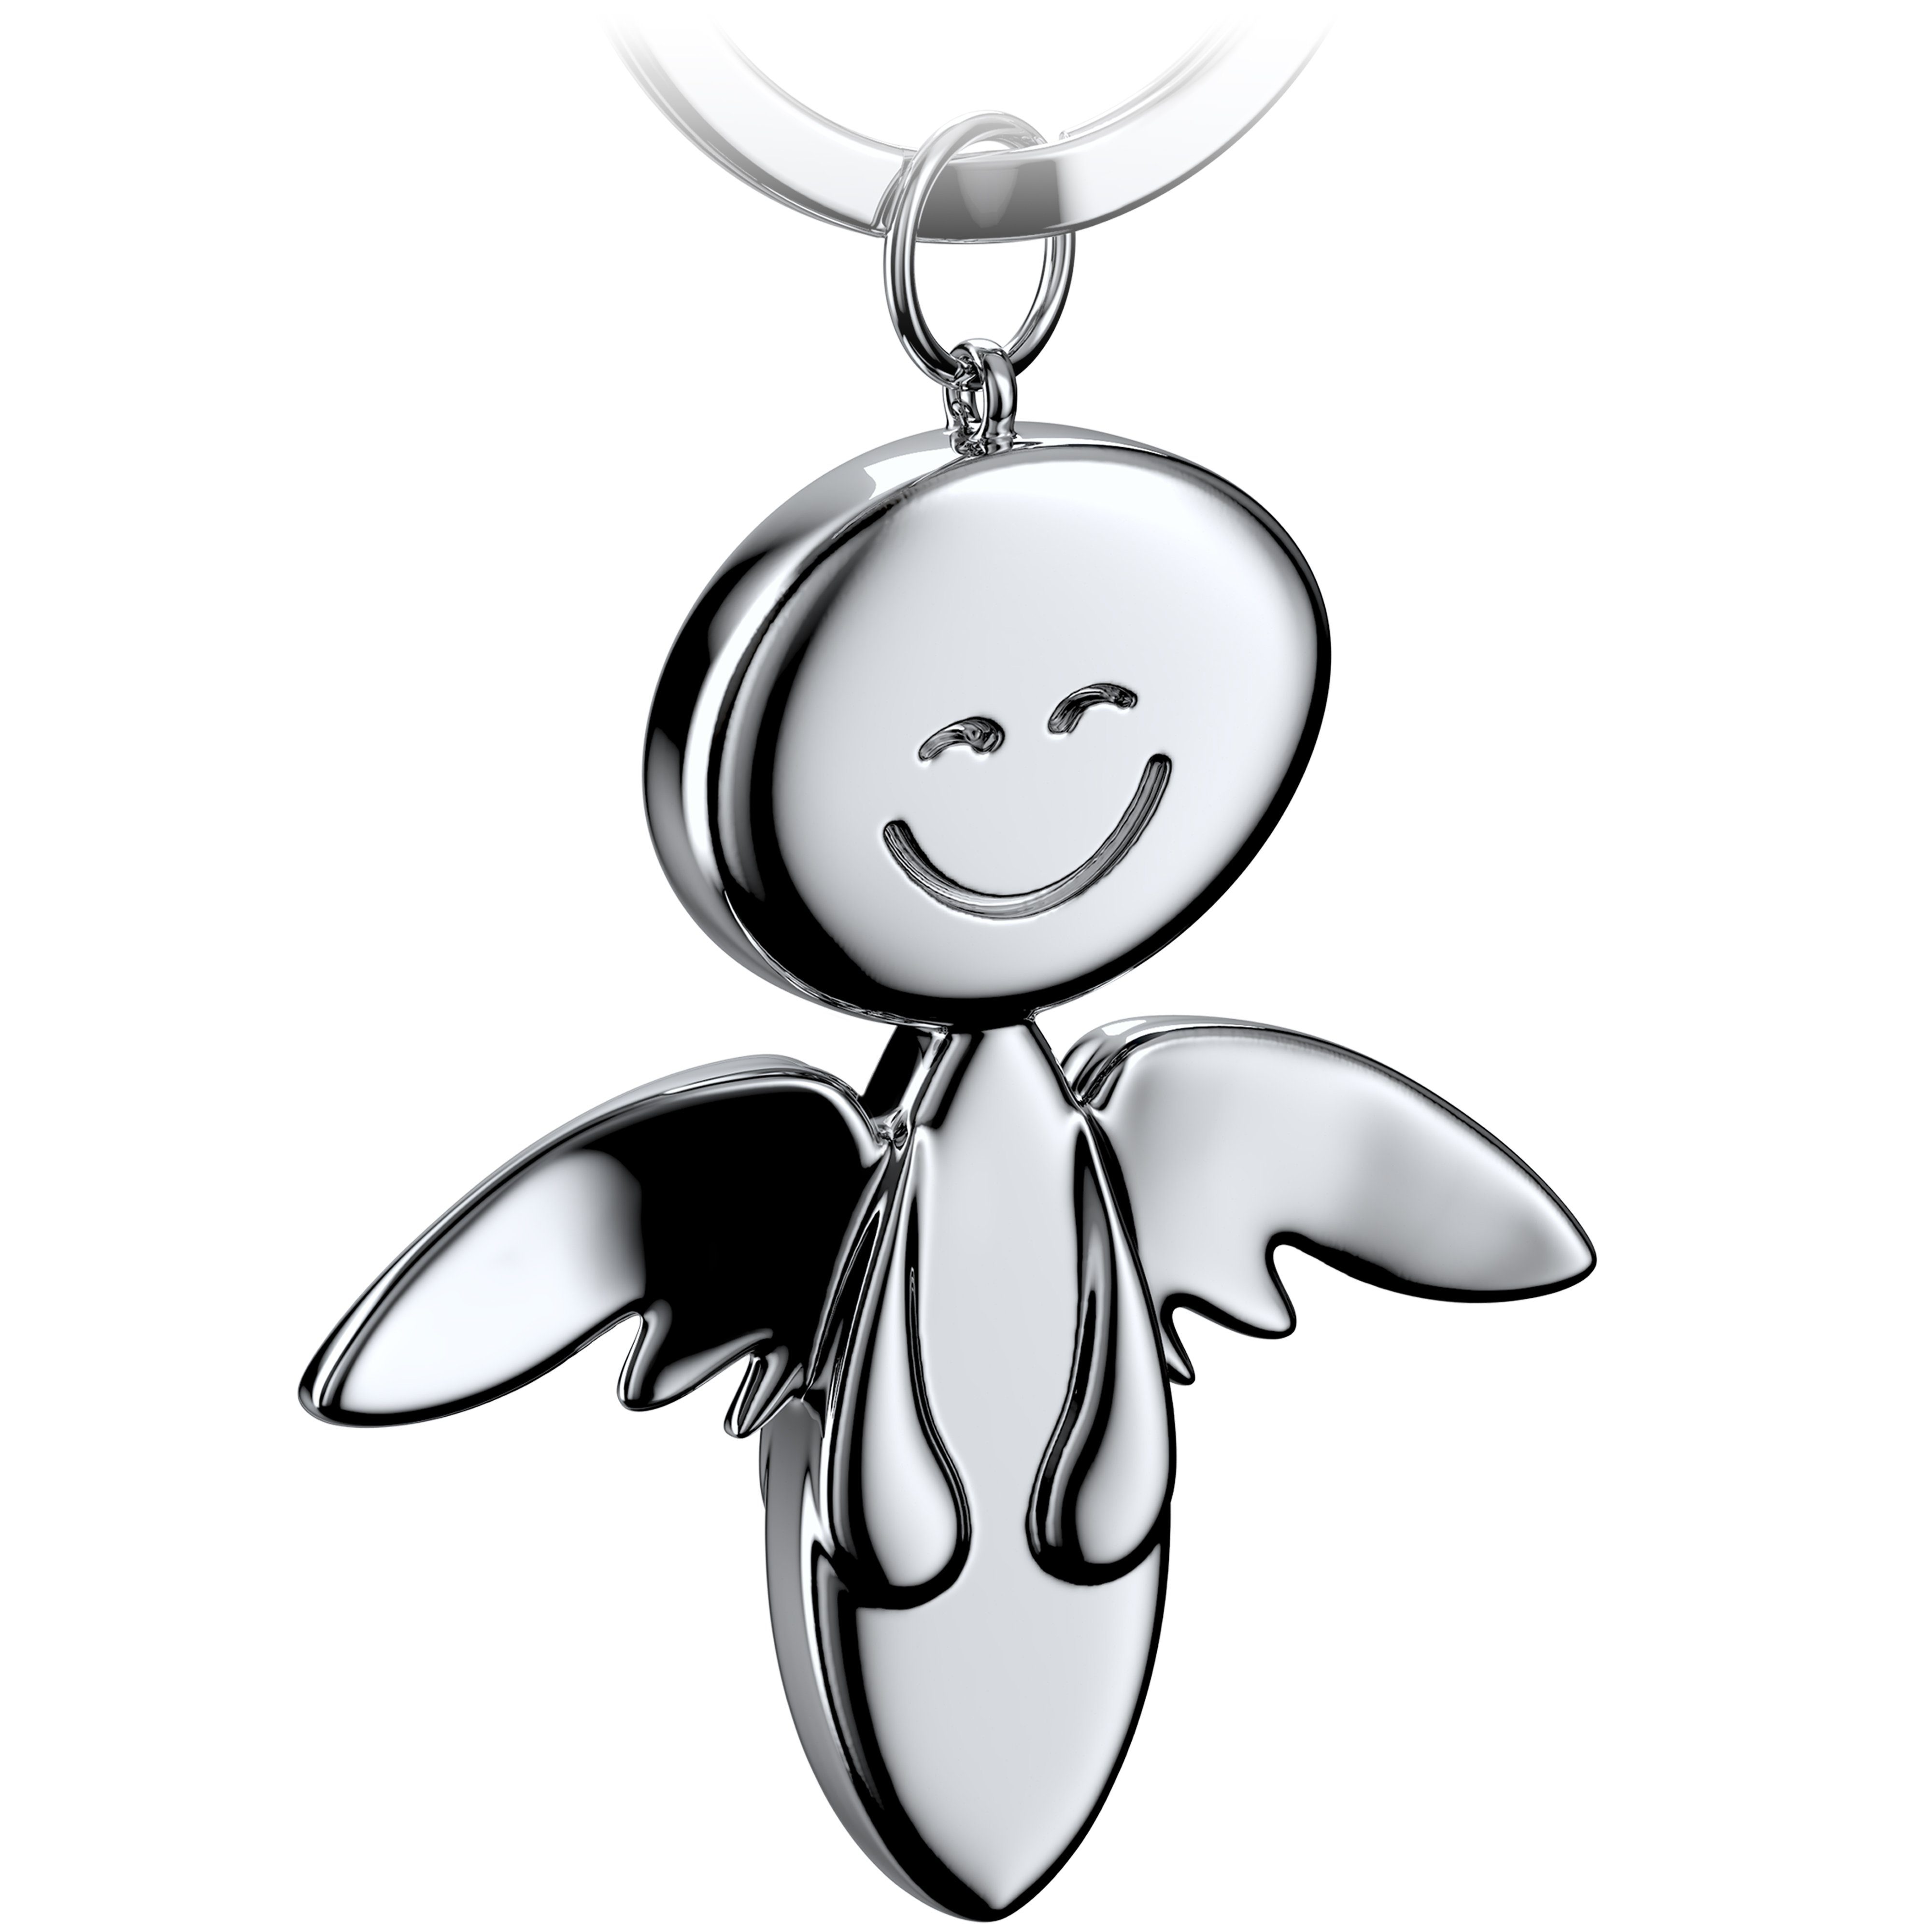 FABACH Schlüsselanhänger Schutzengel Smile - Engel Anhänger aus Metall - Geschenk Glücksbringer Silber